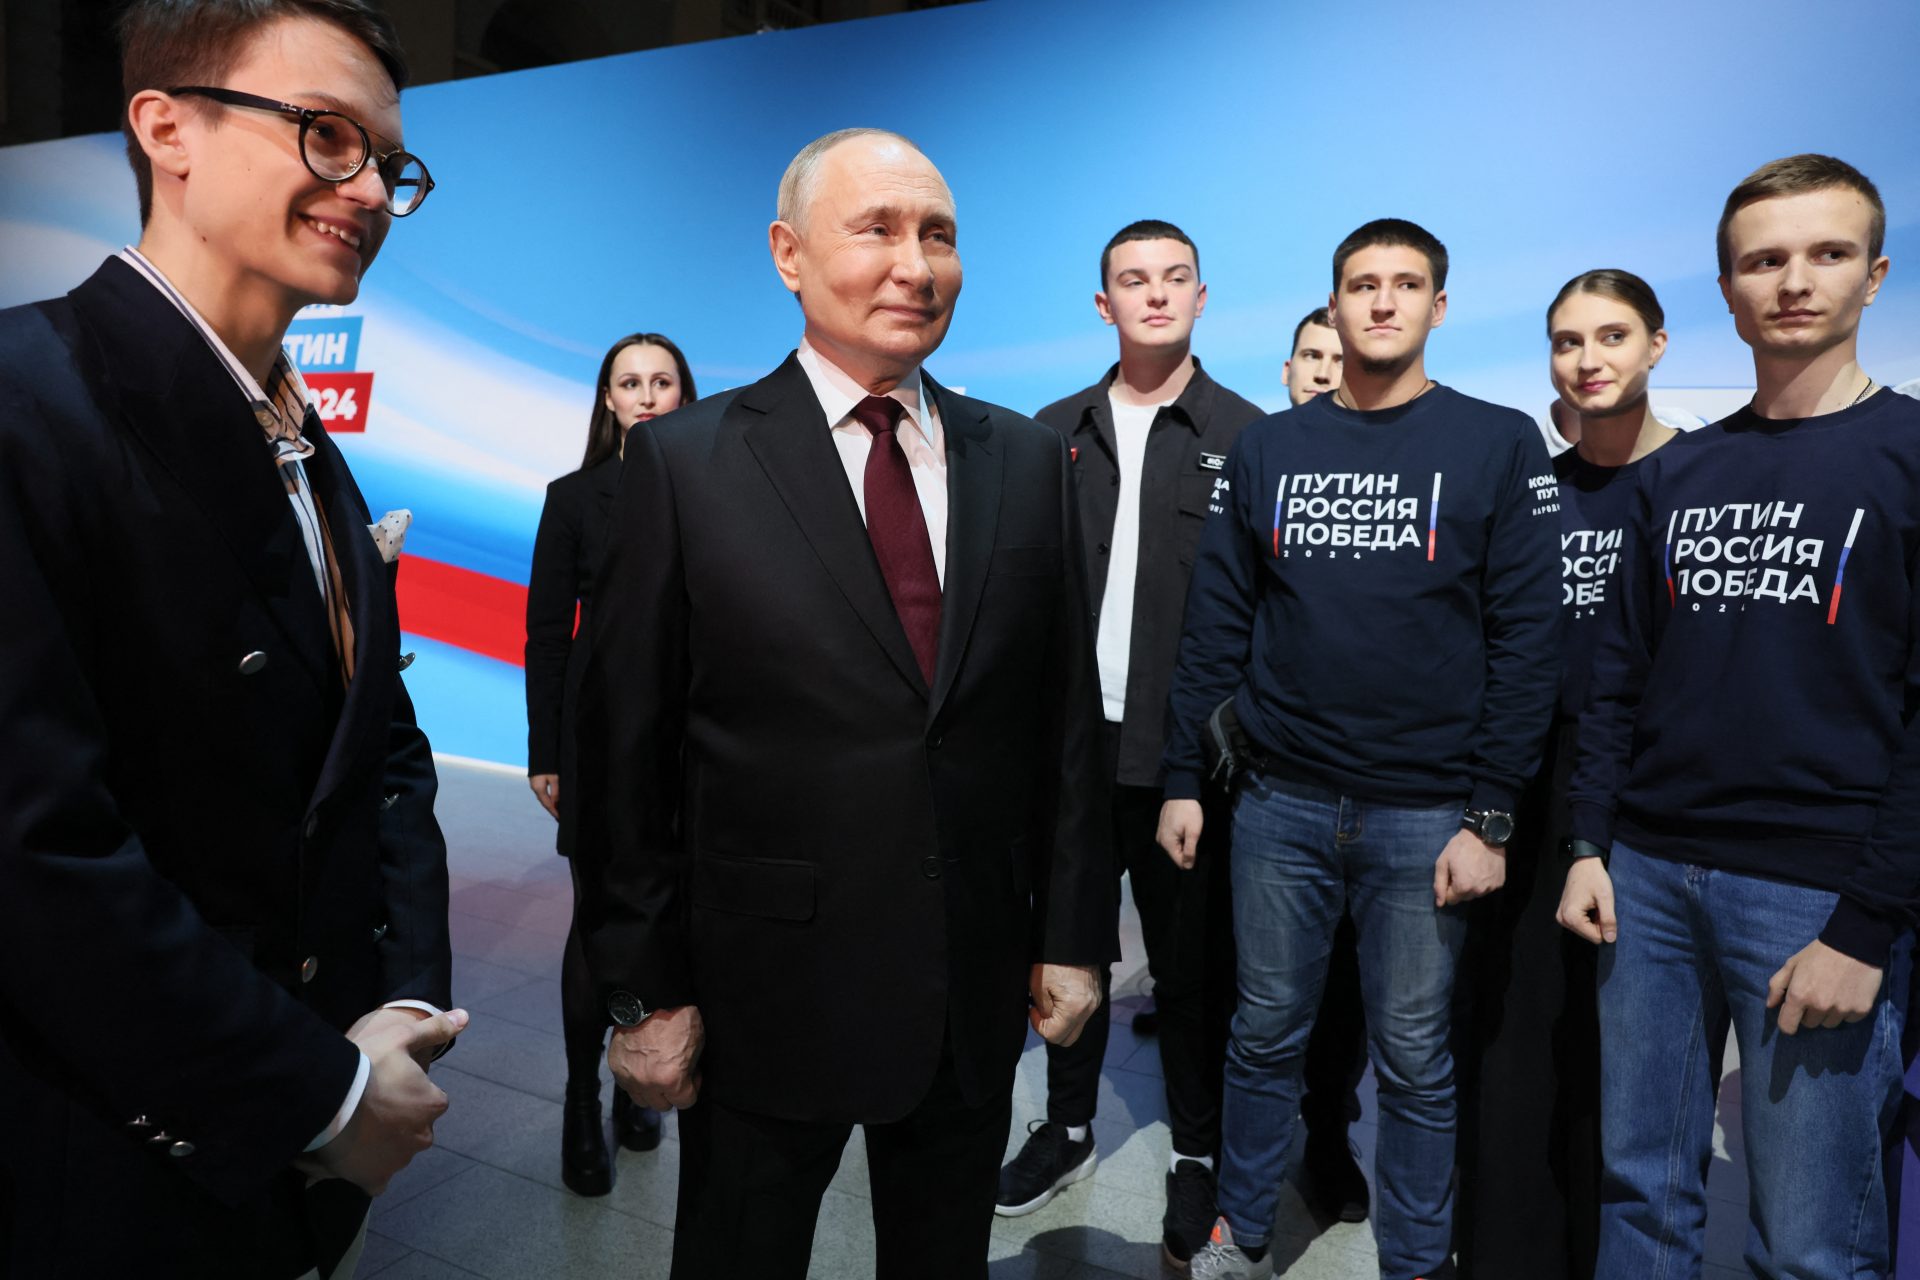 War games: Putin wants Russia to make video games